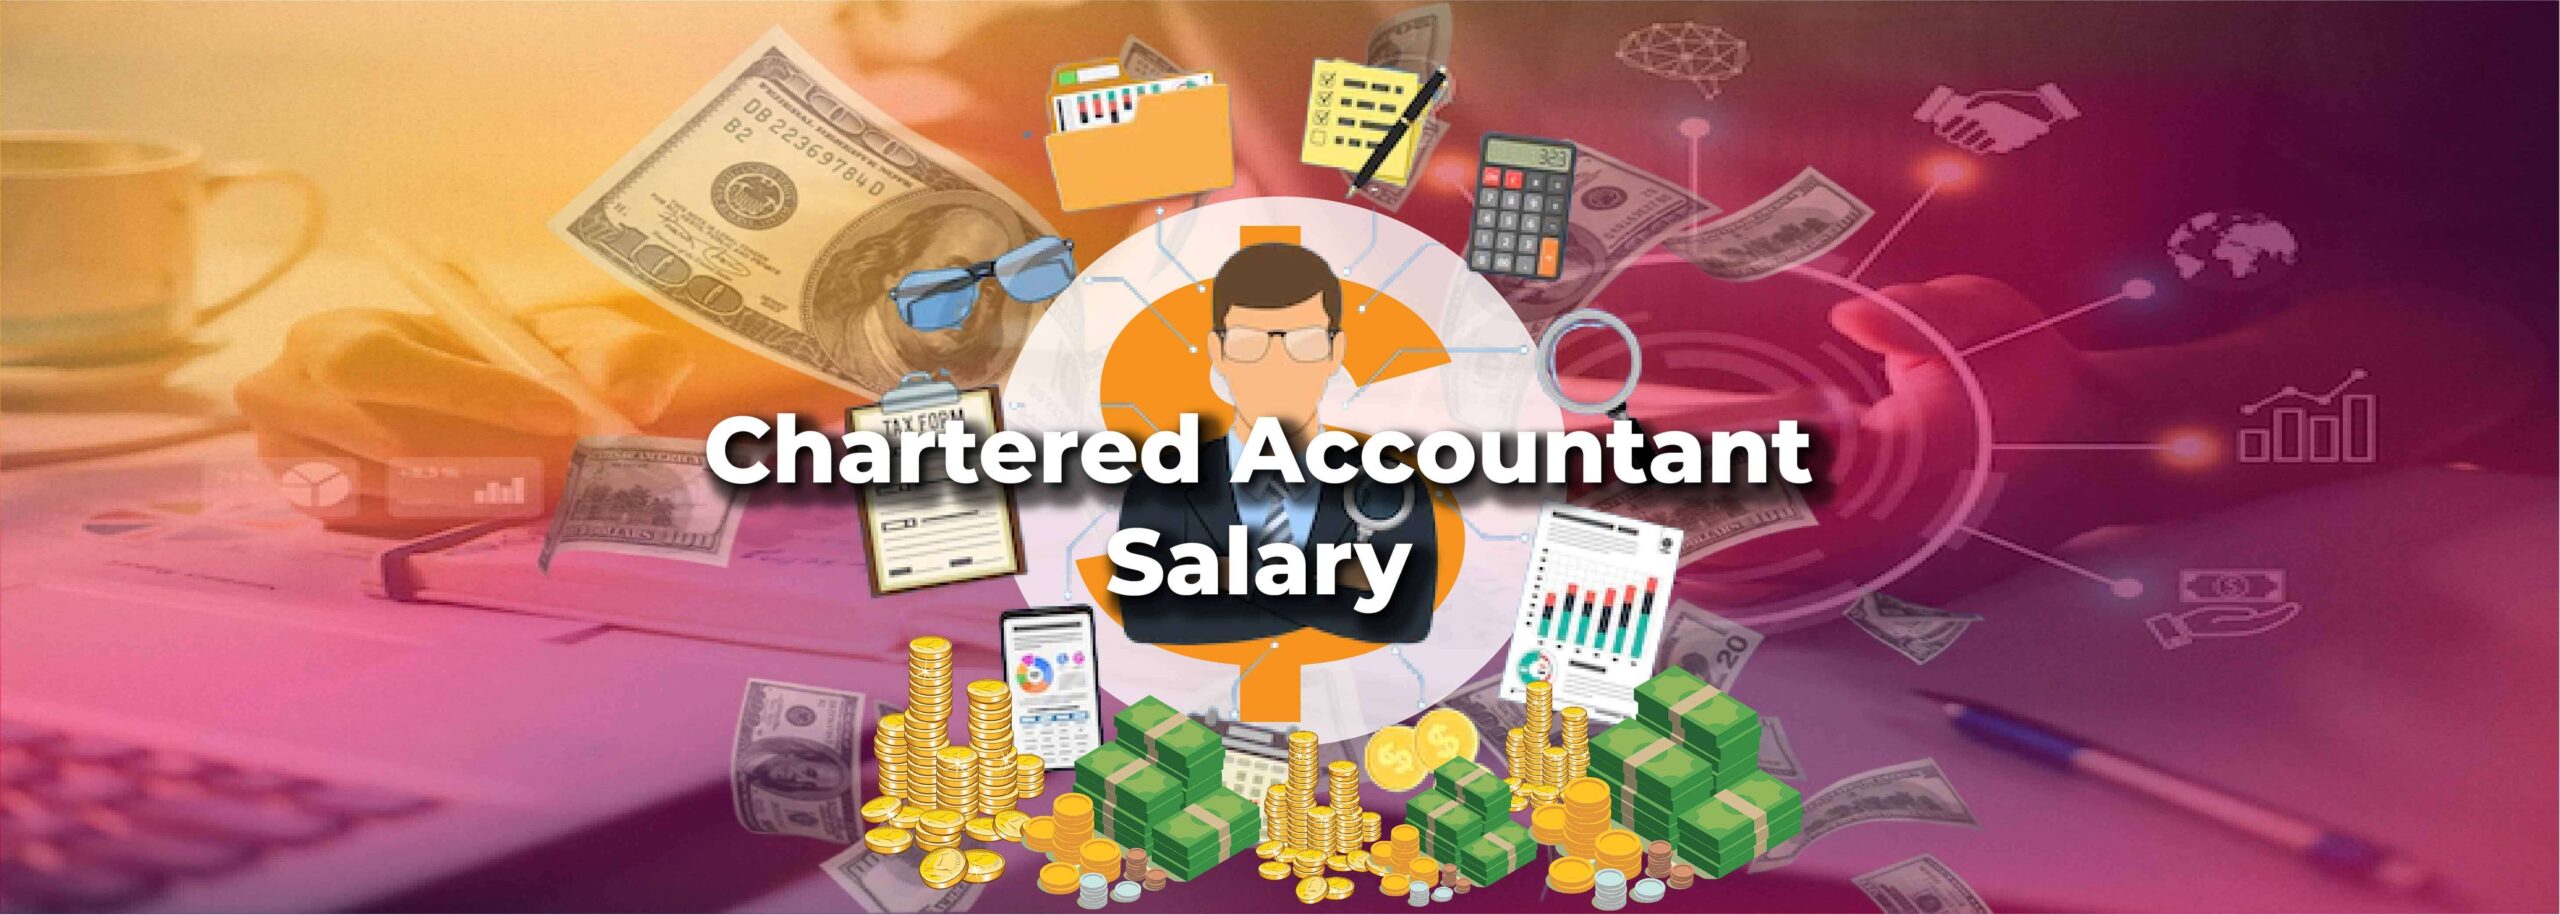 Chartered Accountant Salary In India | DataTrained